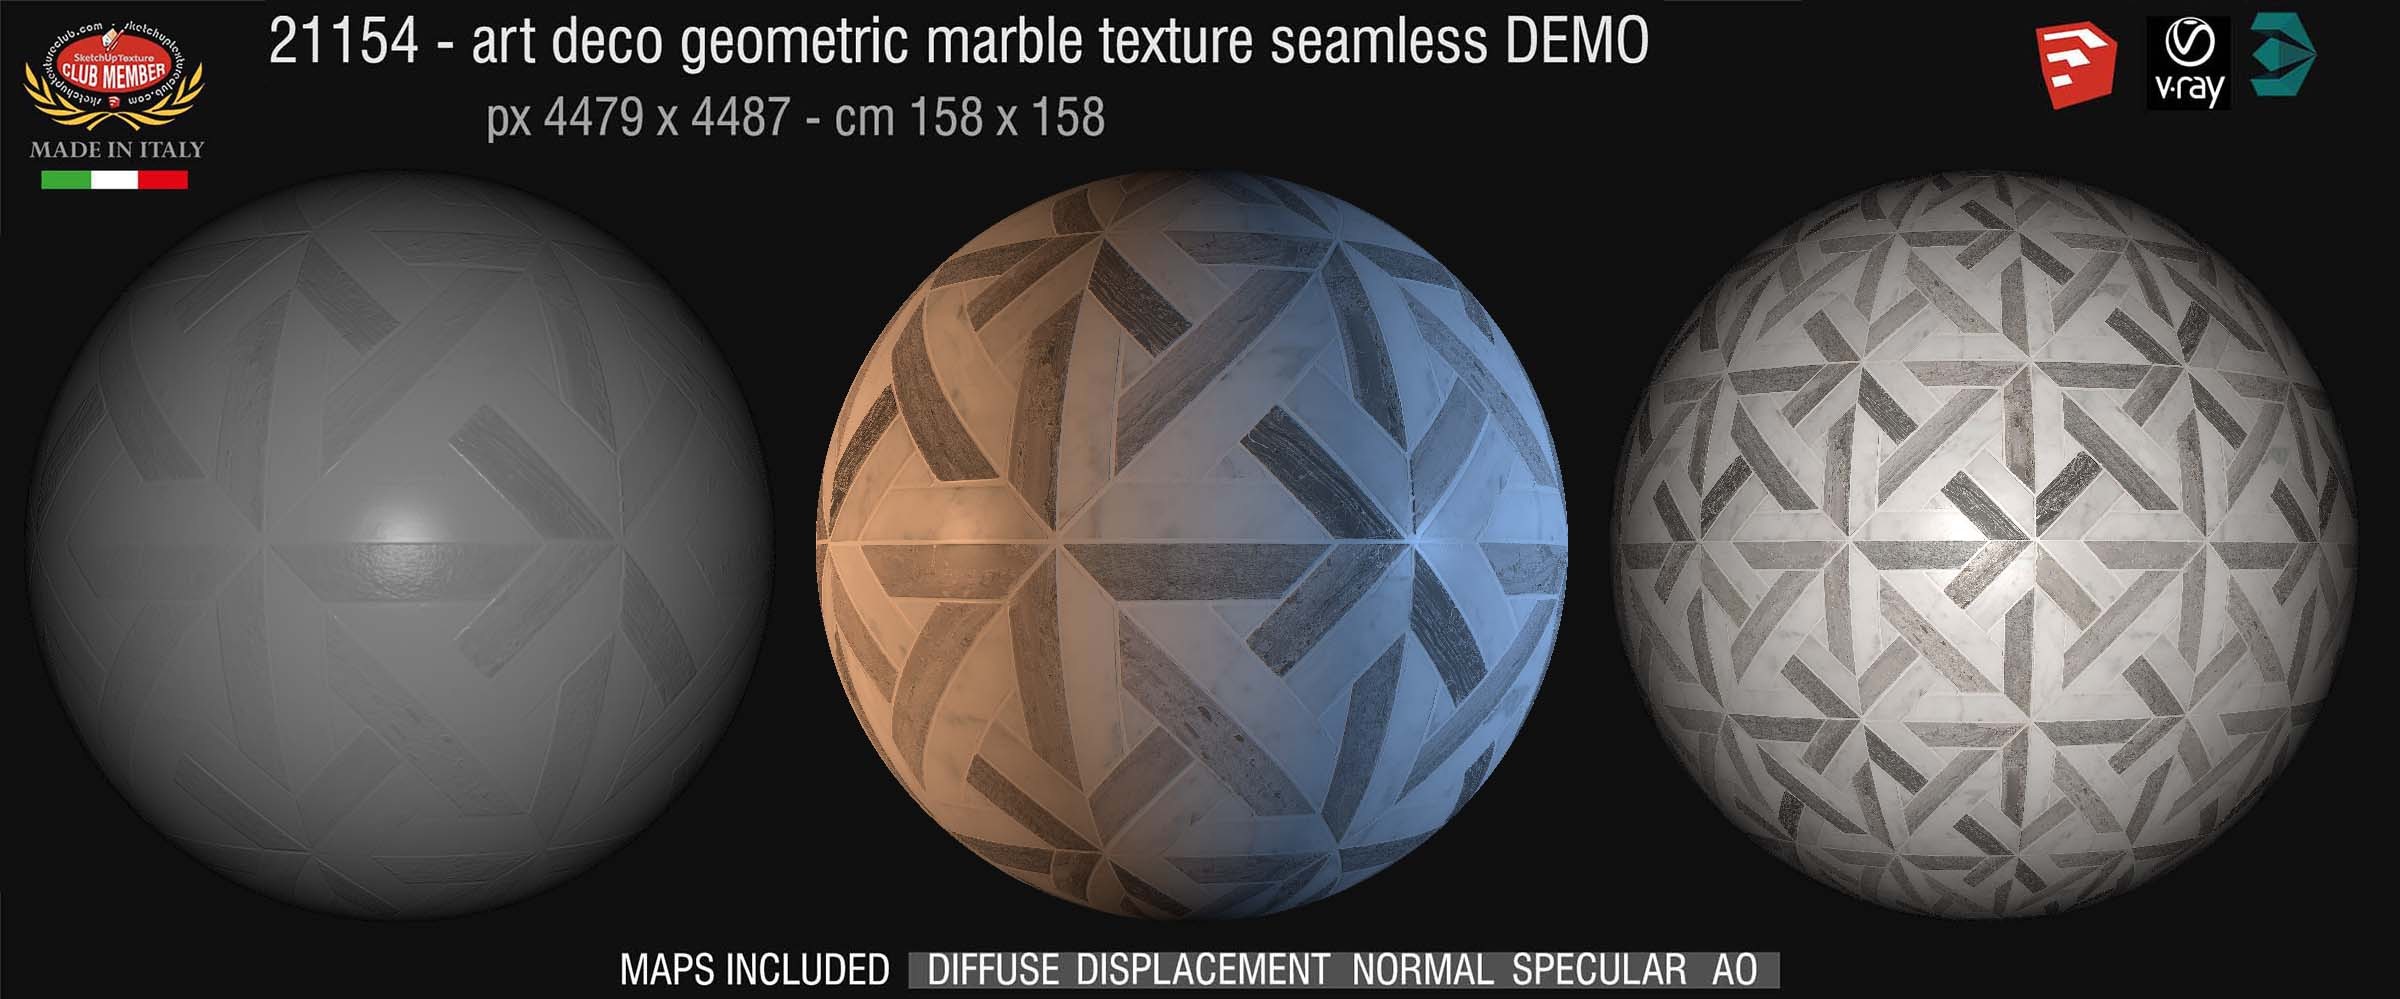 21154 Art deco geometric marble tiles texture seamless + maps DEMO